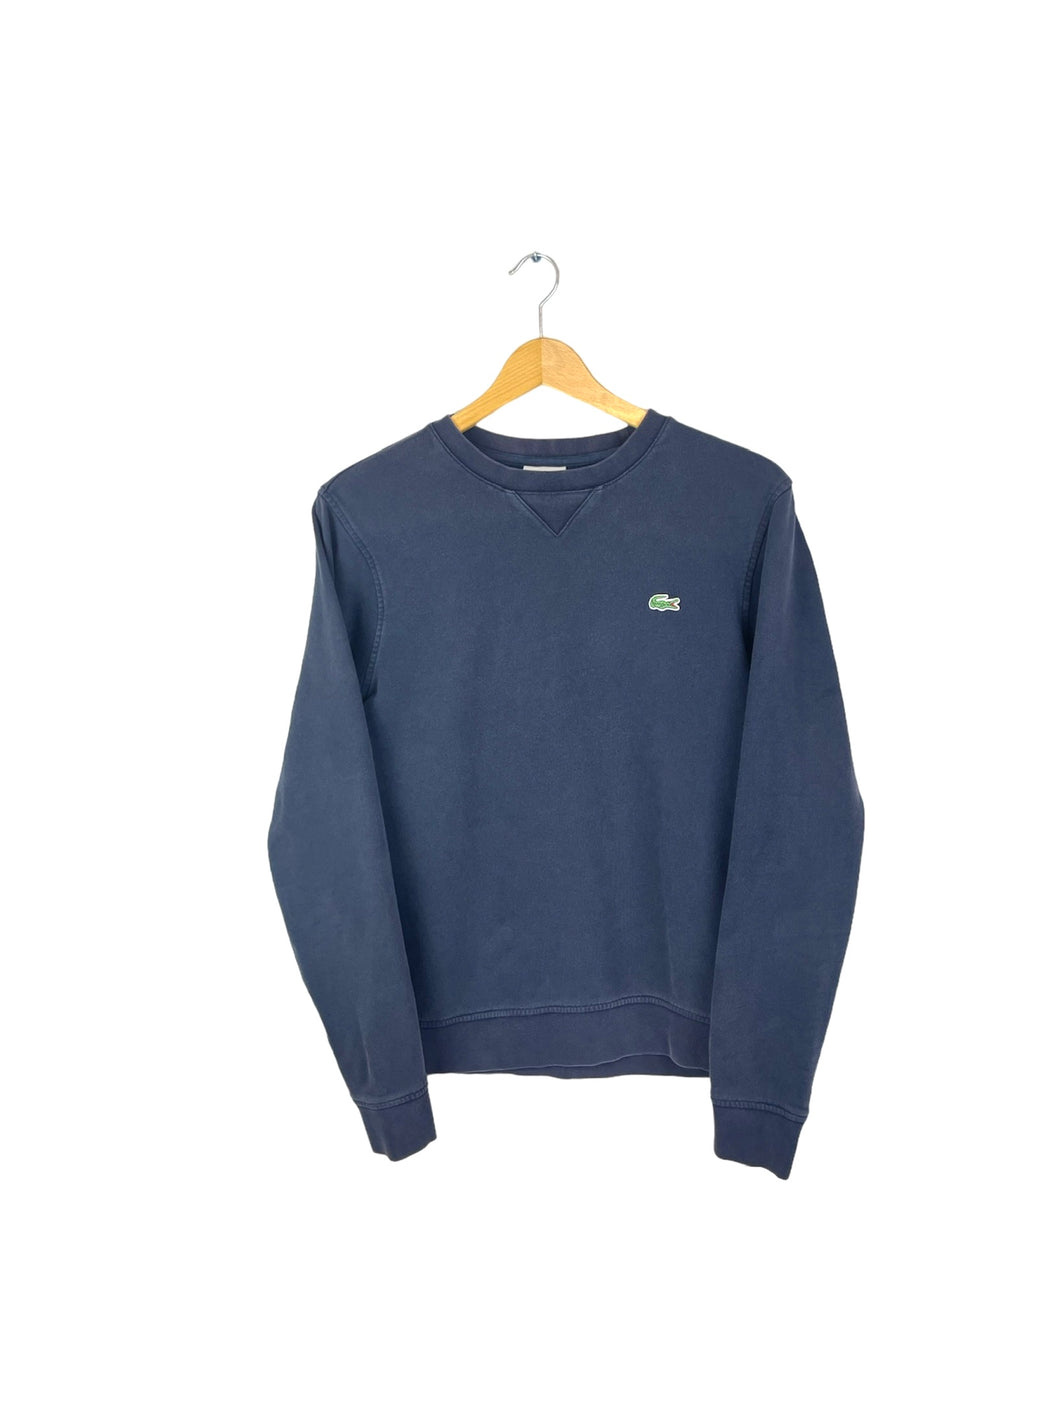 Lacoste Sweatshirt - Small